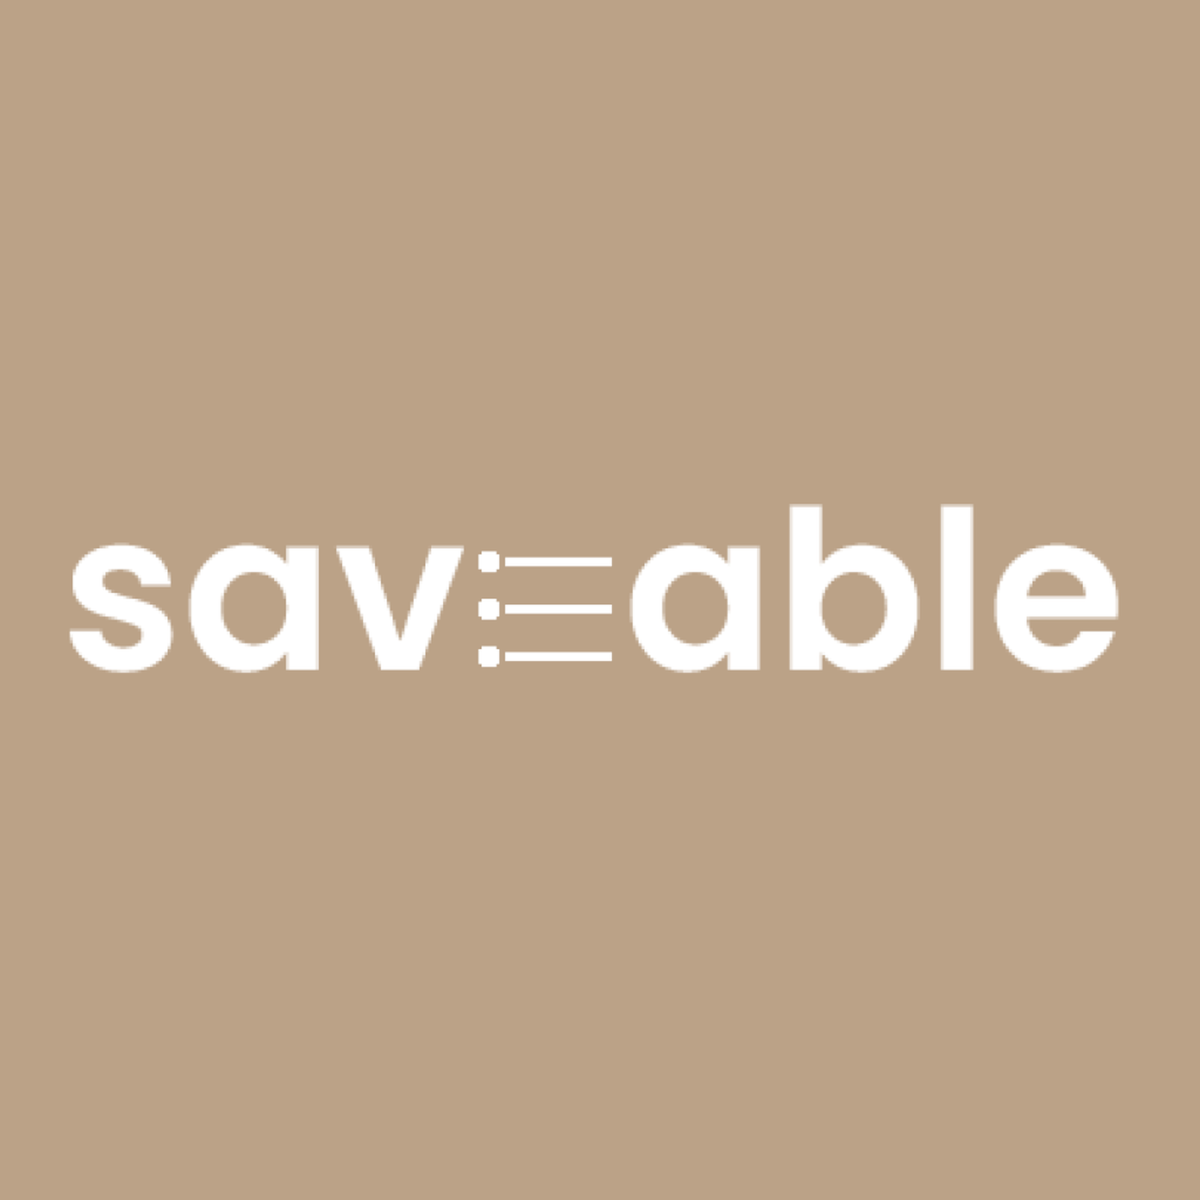 saveable